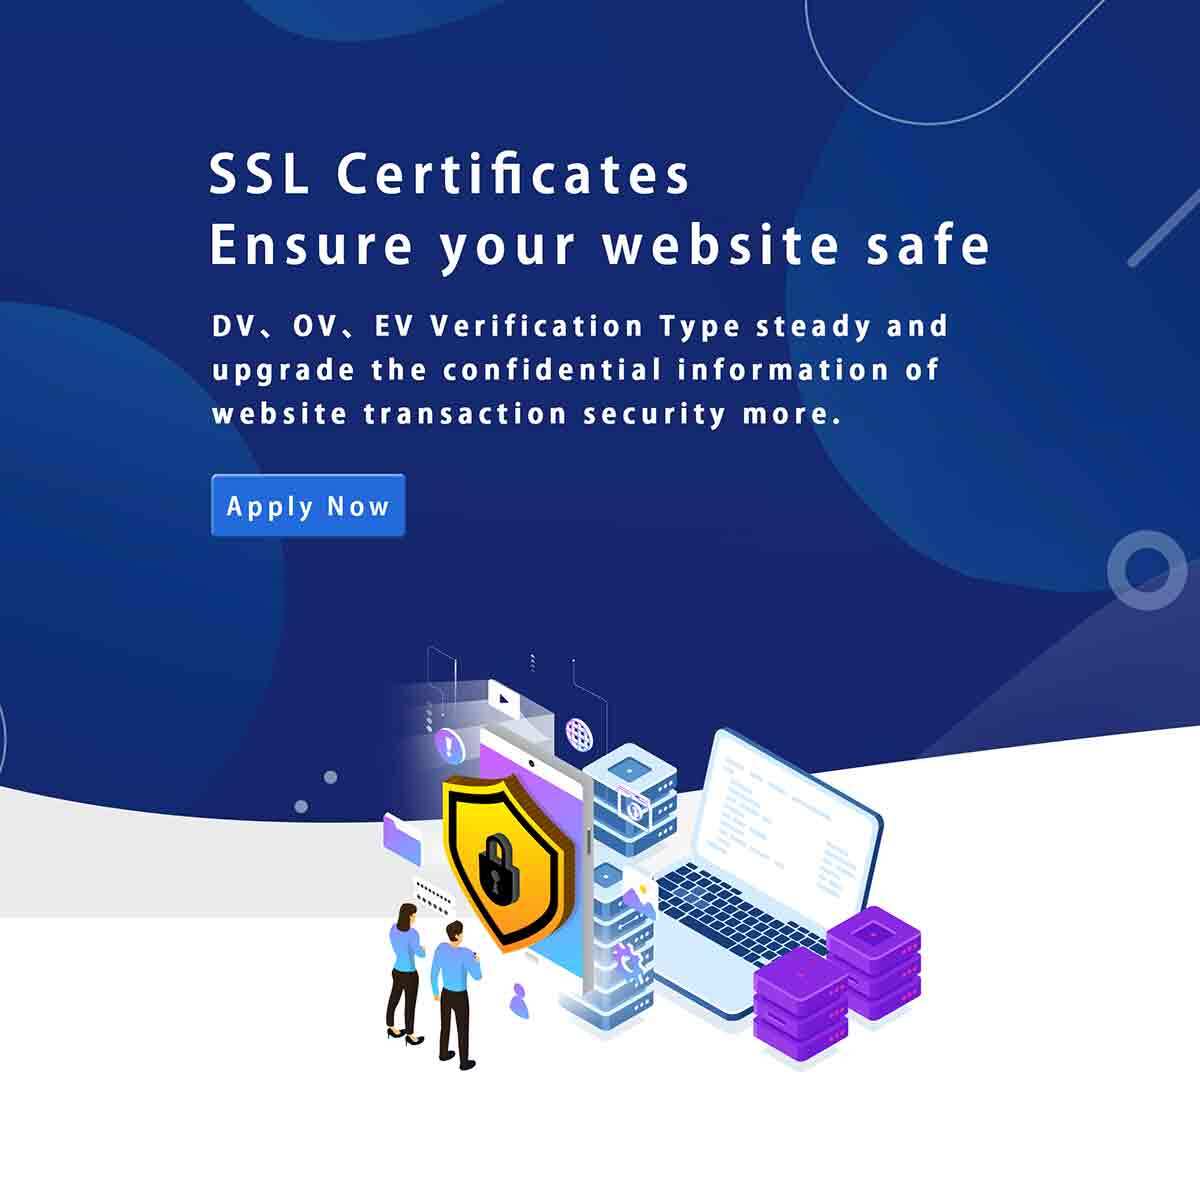 SSL Certificates ensure your website safe